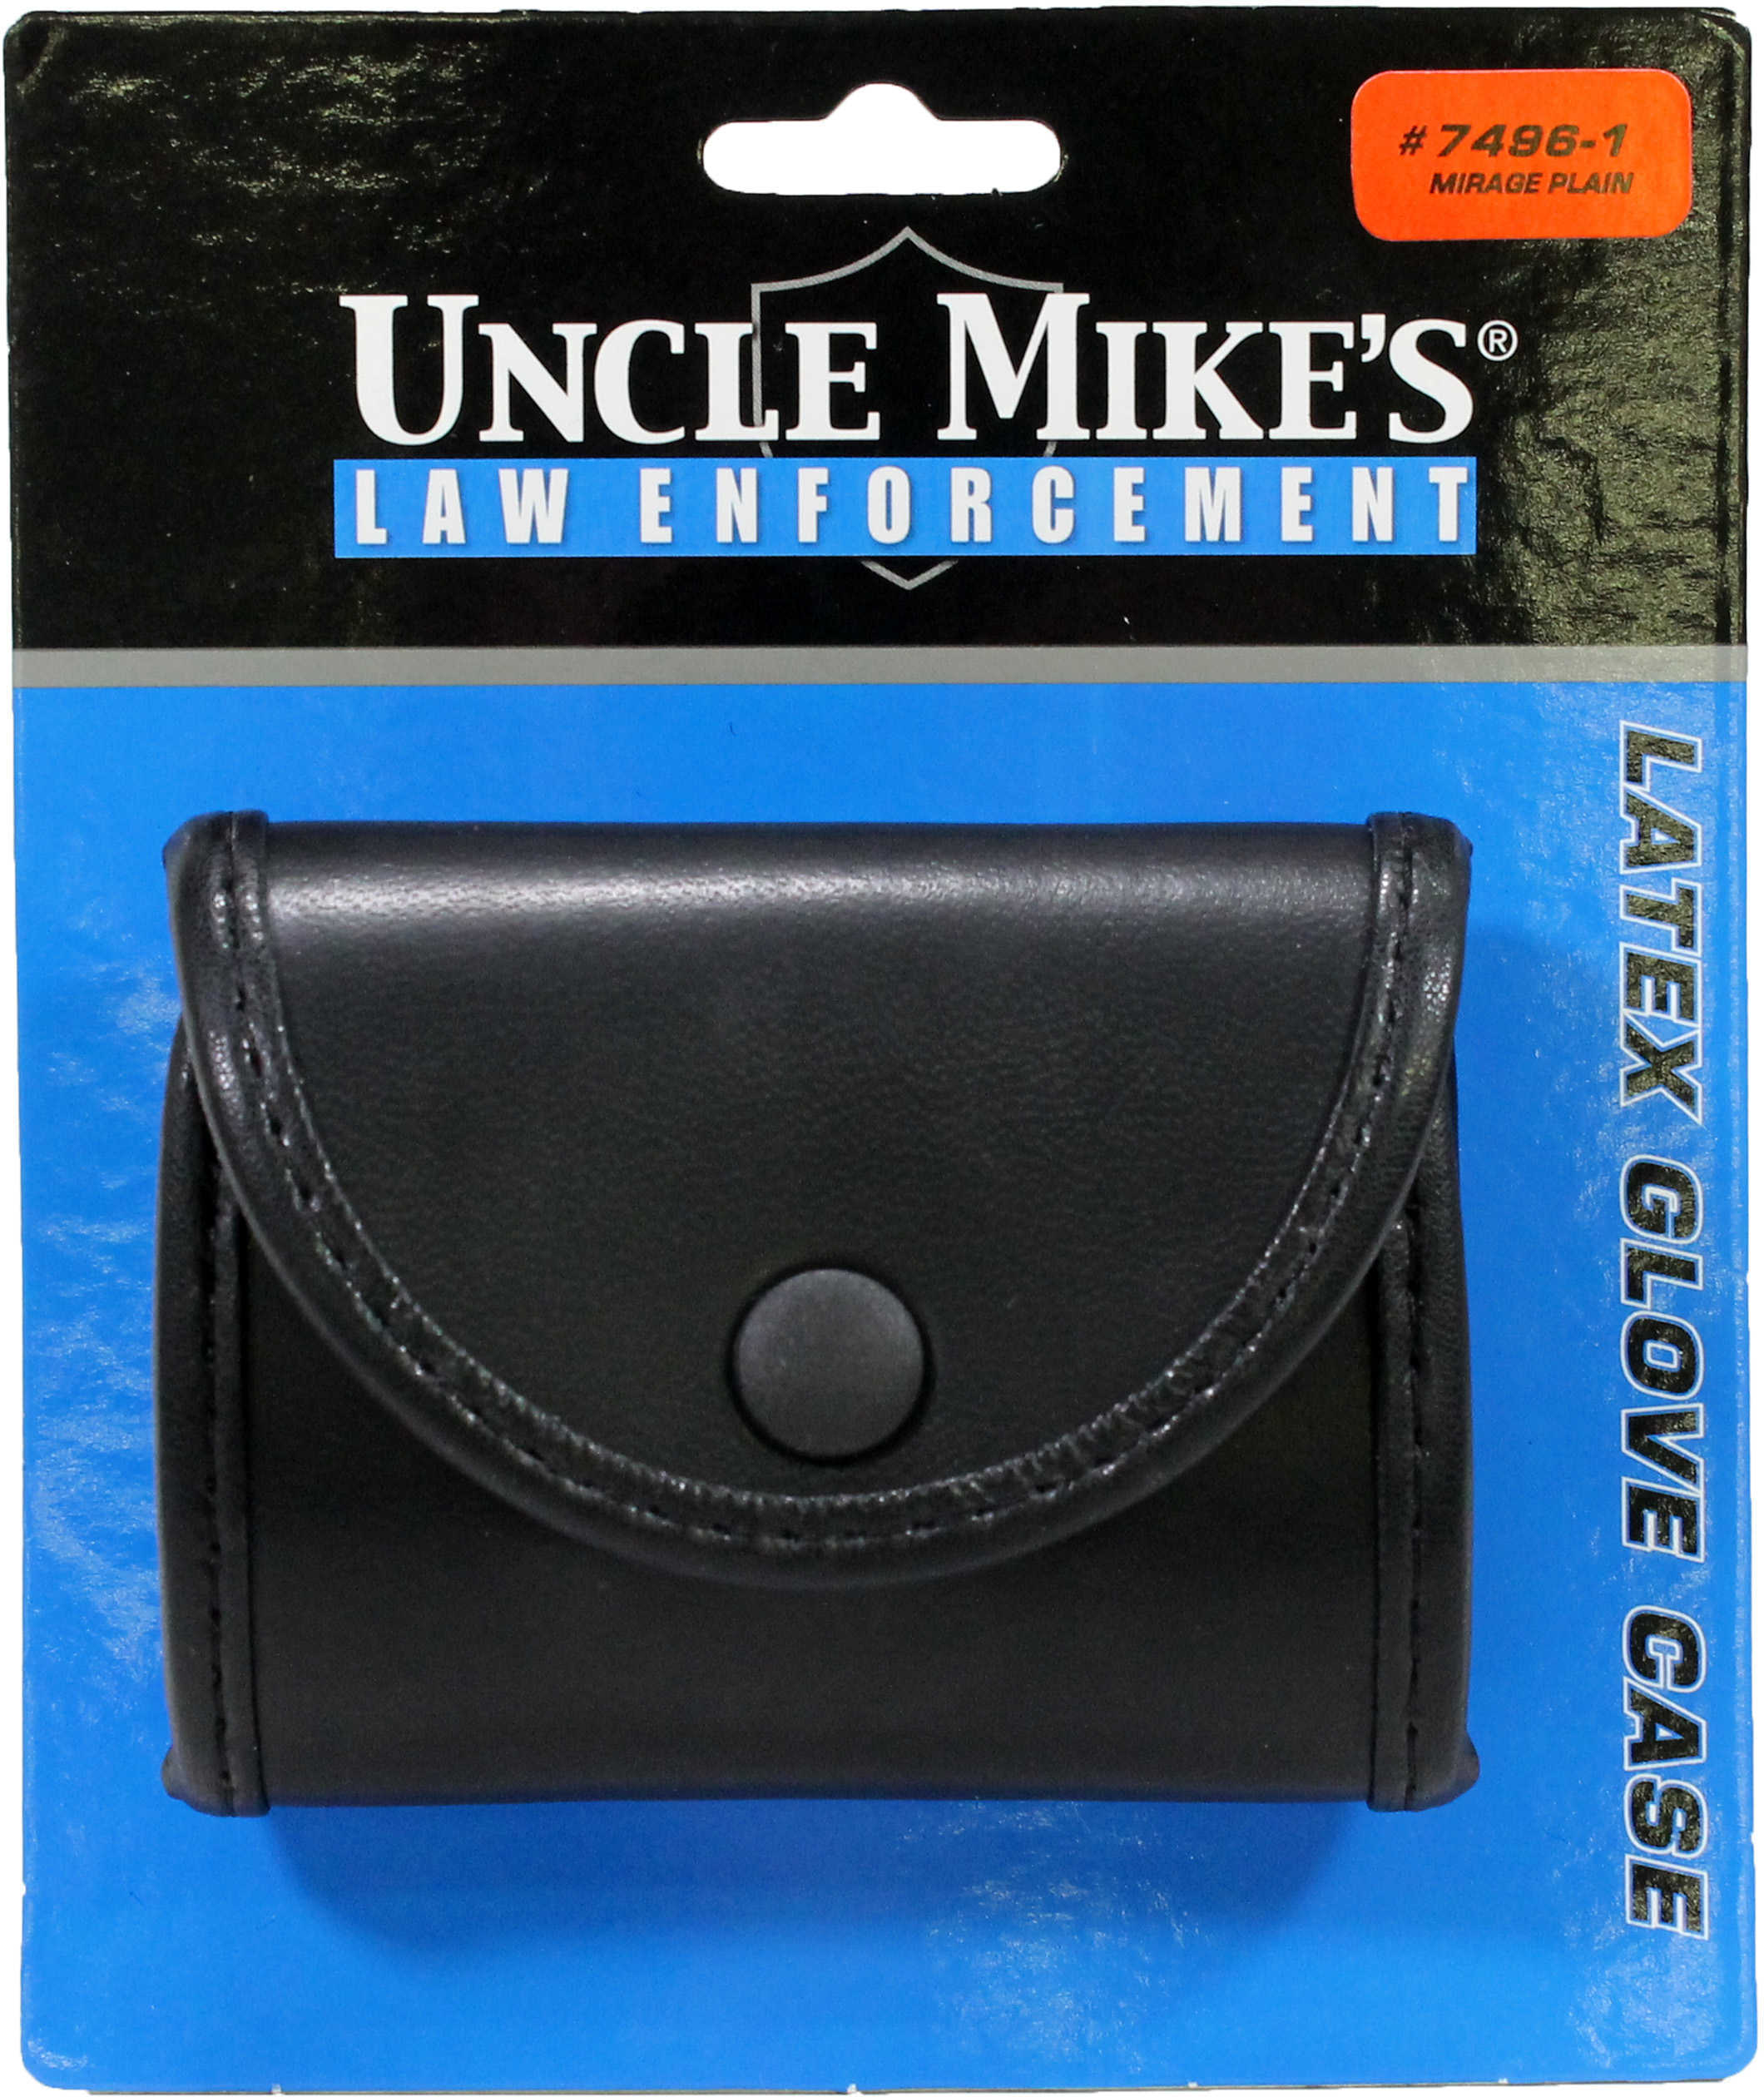 Uncle Mikes Mirage Double Latex Glove Pouch Plain Black Md: 74961